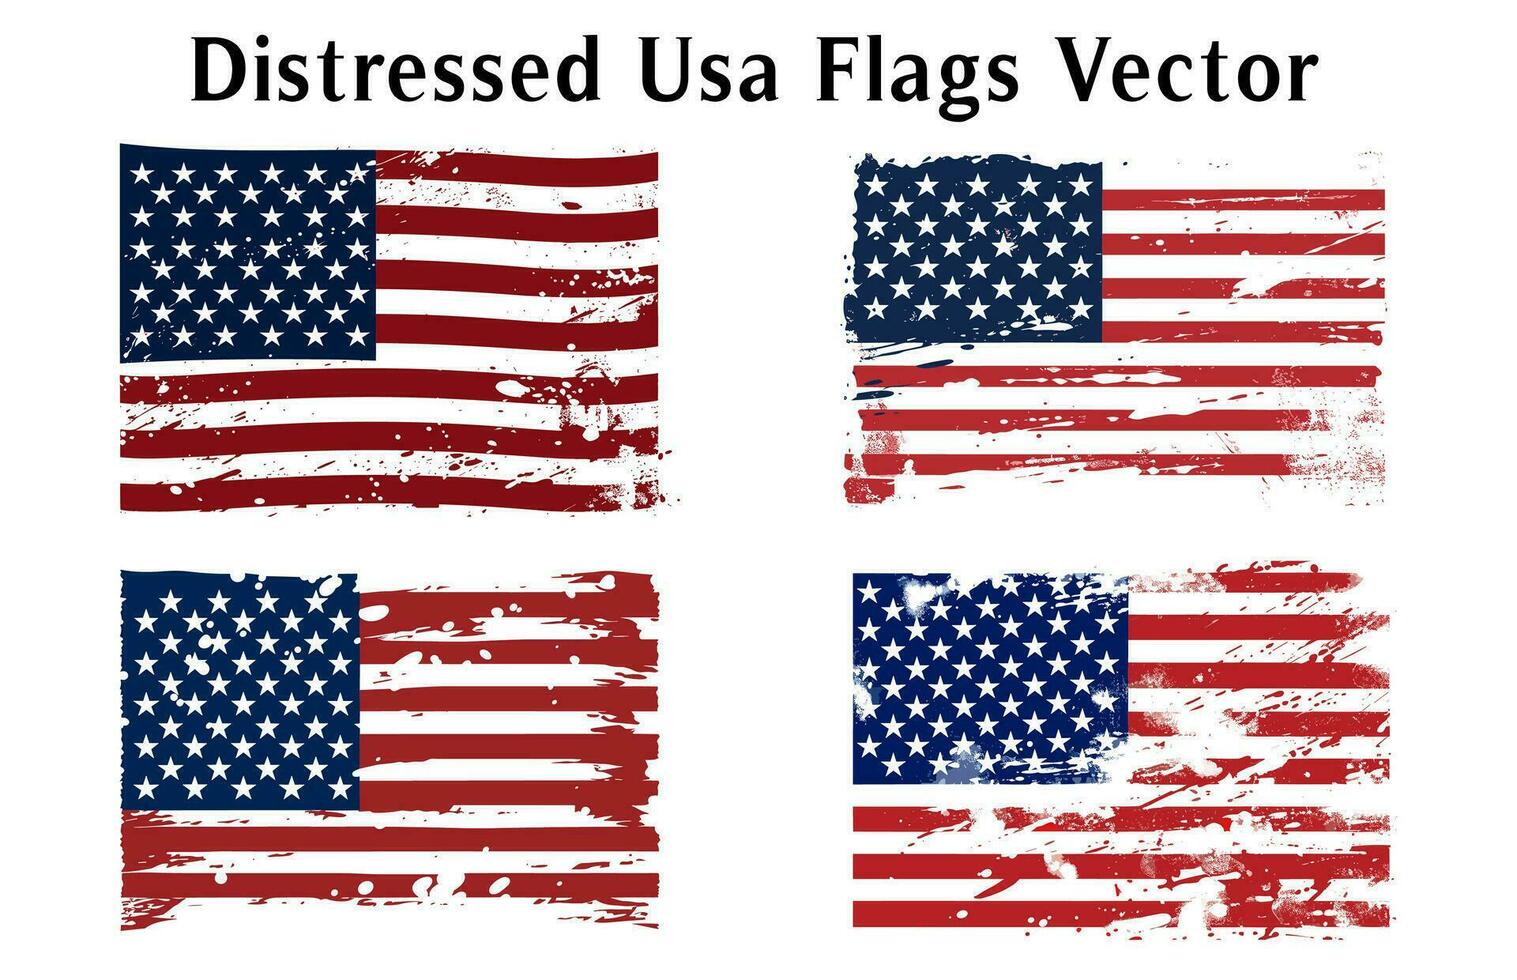 verontrust Verenigde Staten van Amerika vlaggen vector illustratie, Amerikaans vlag vlak grunge clip art